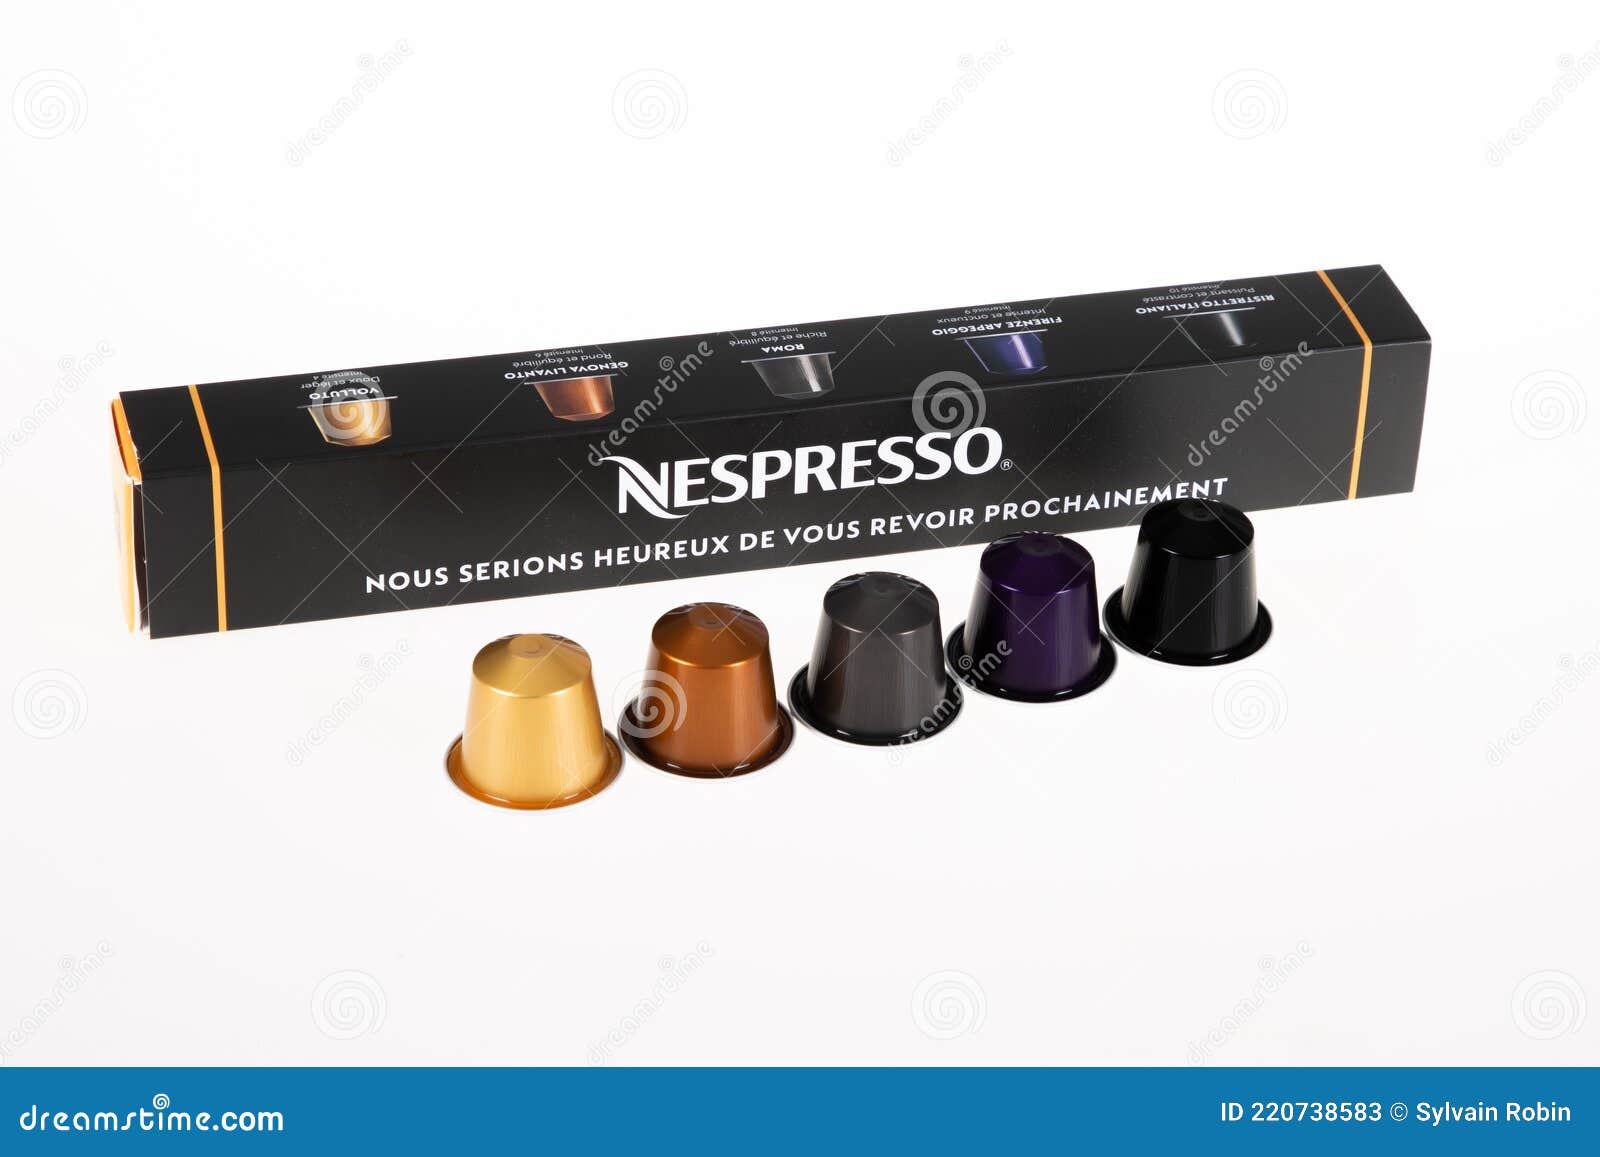 Nespresso box -  France